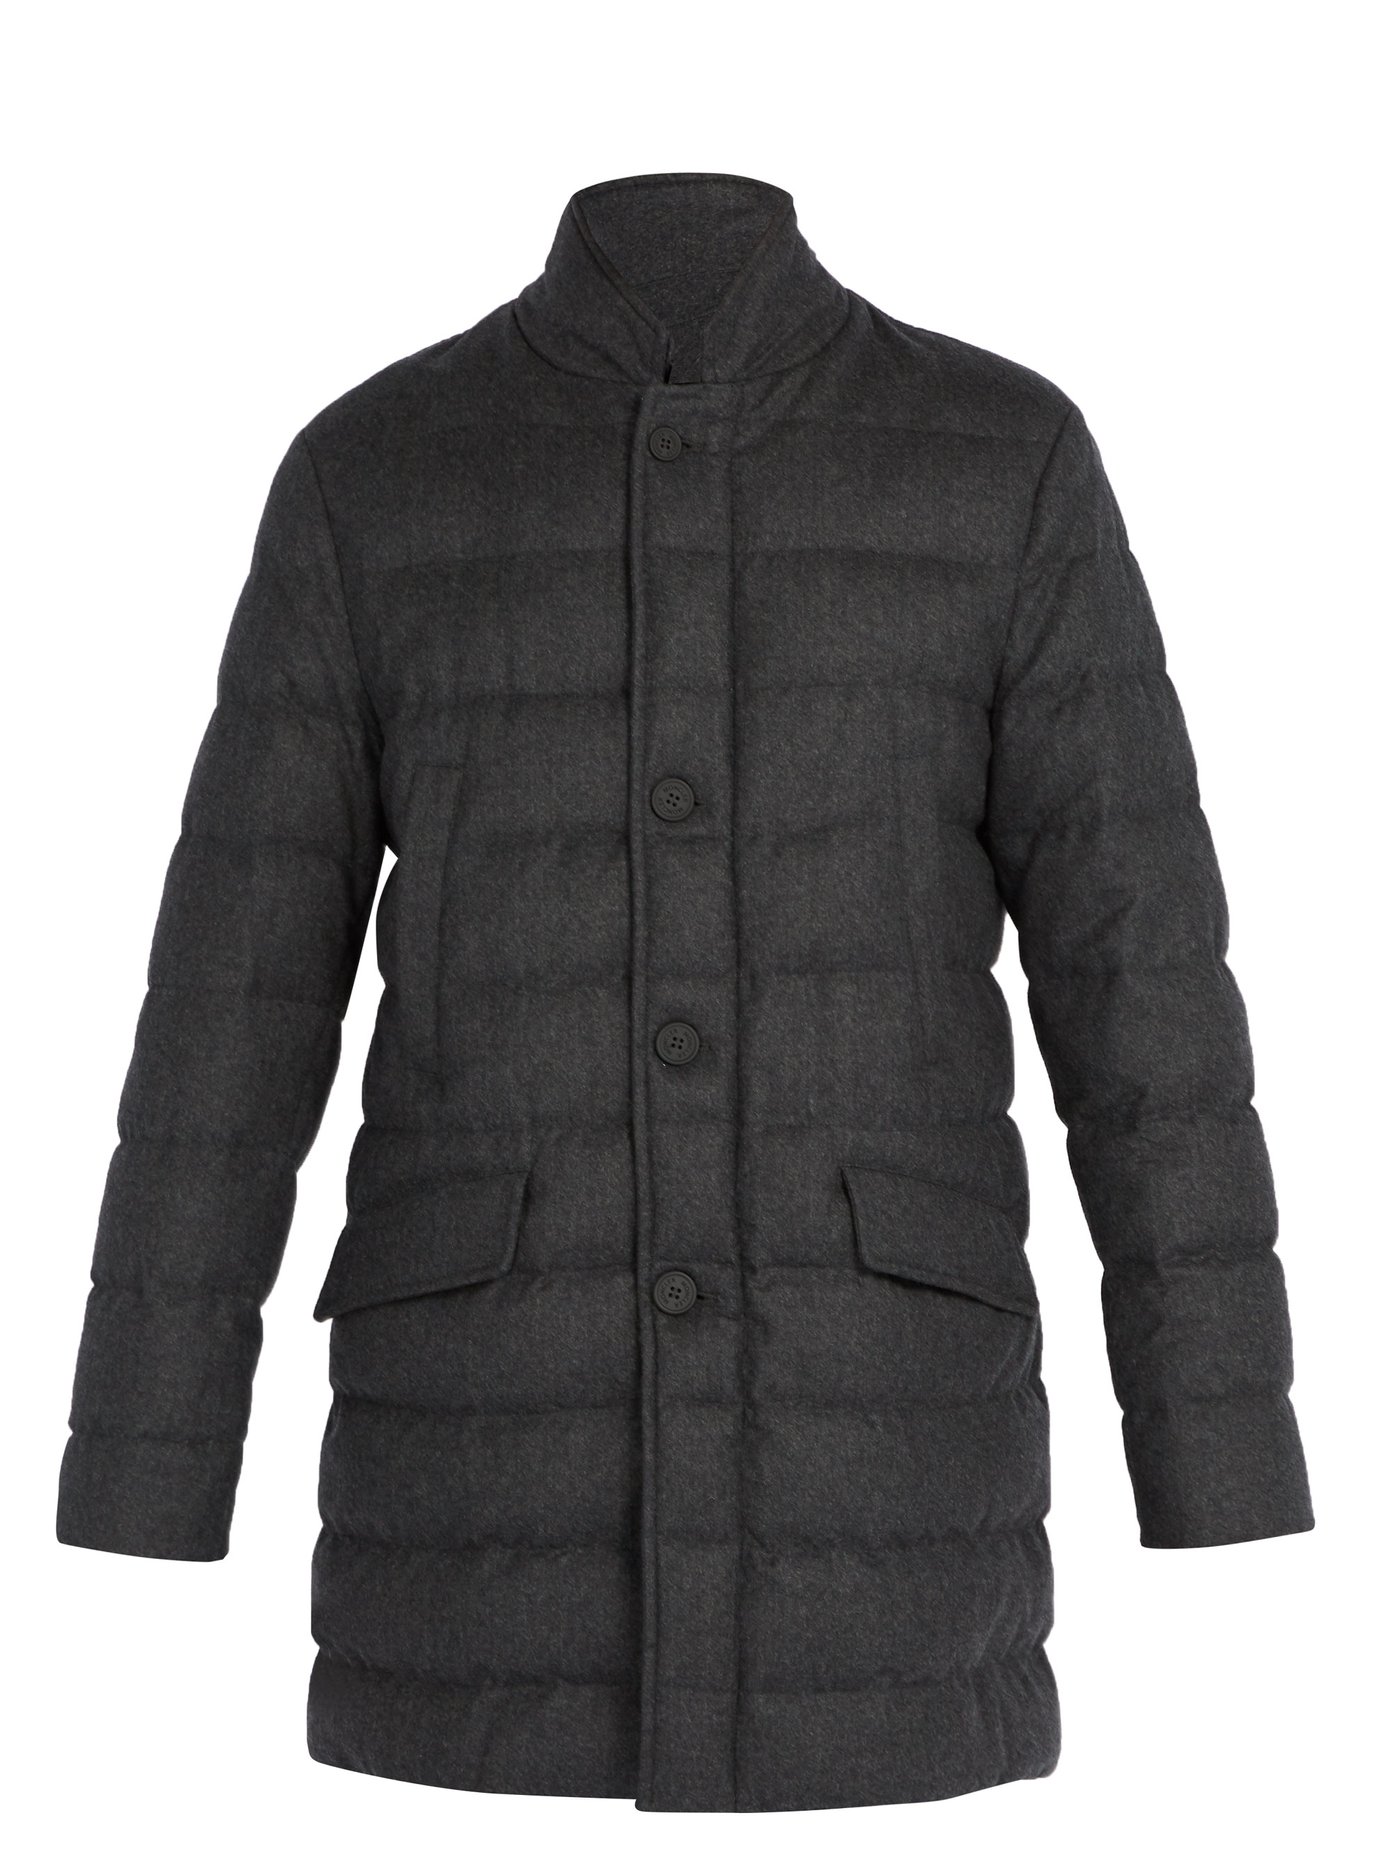 moncler wool coat